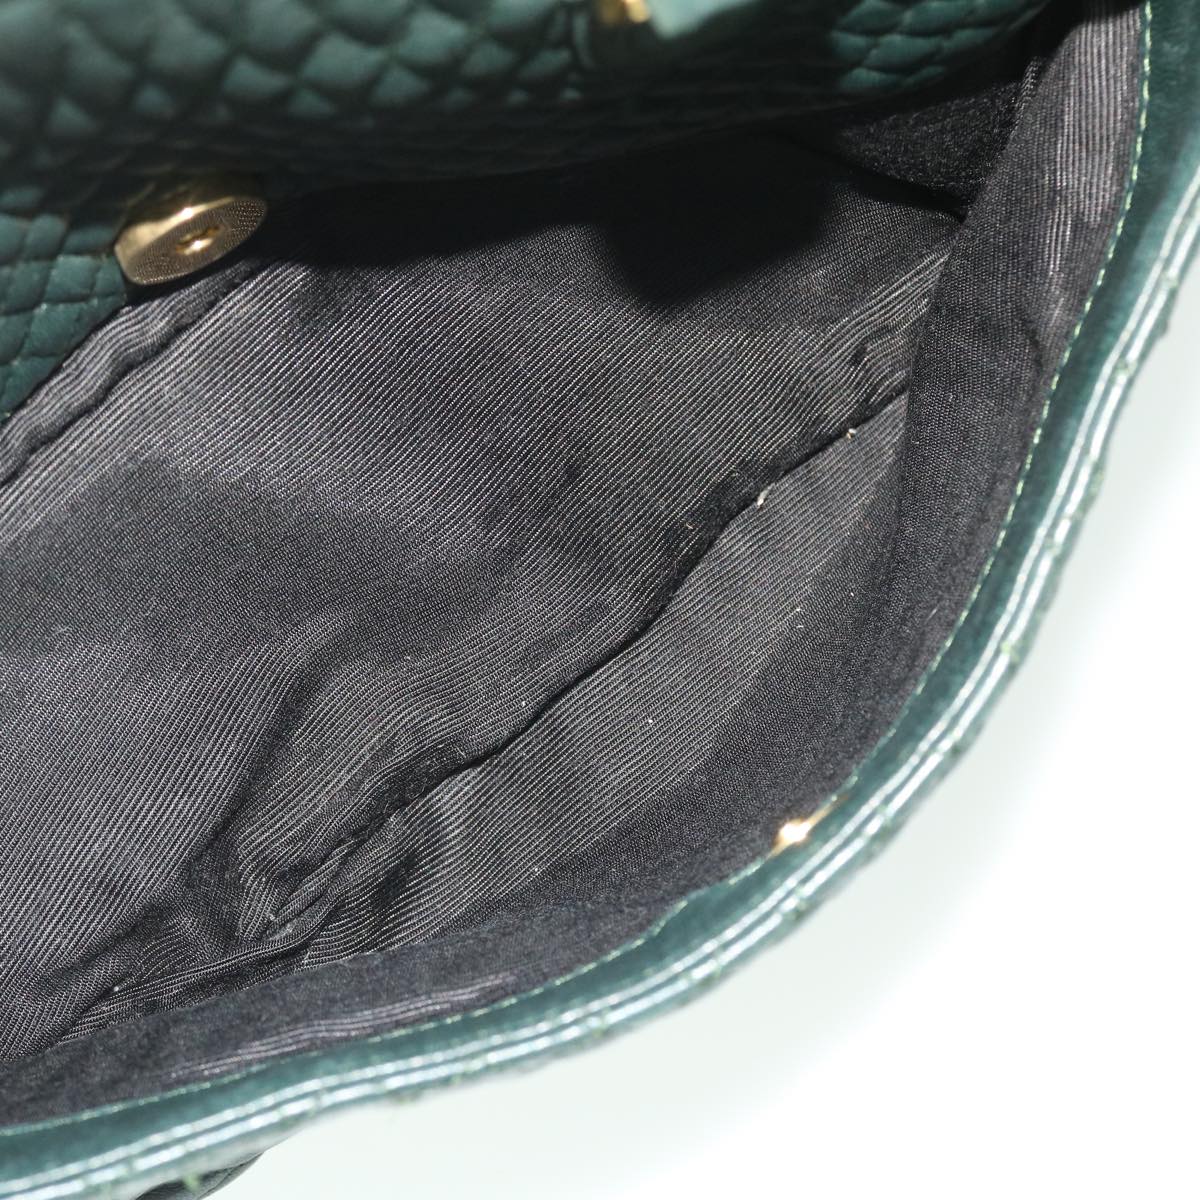 Bally Hand Bag Leather Green Auth Yb354